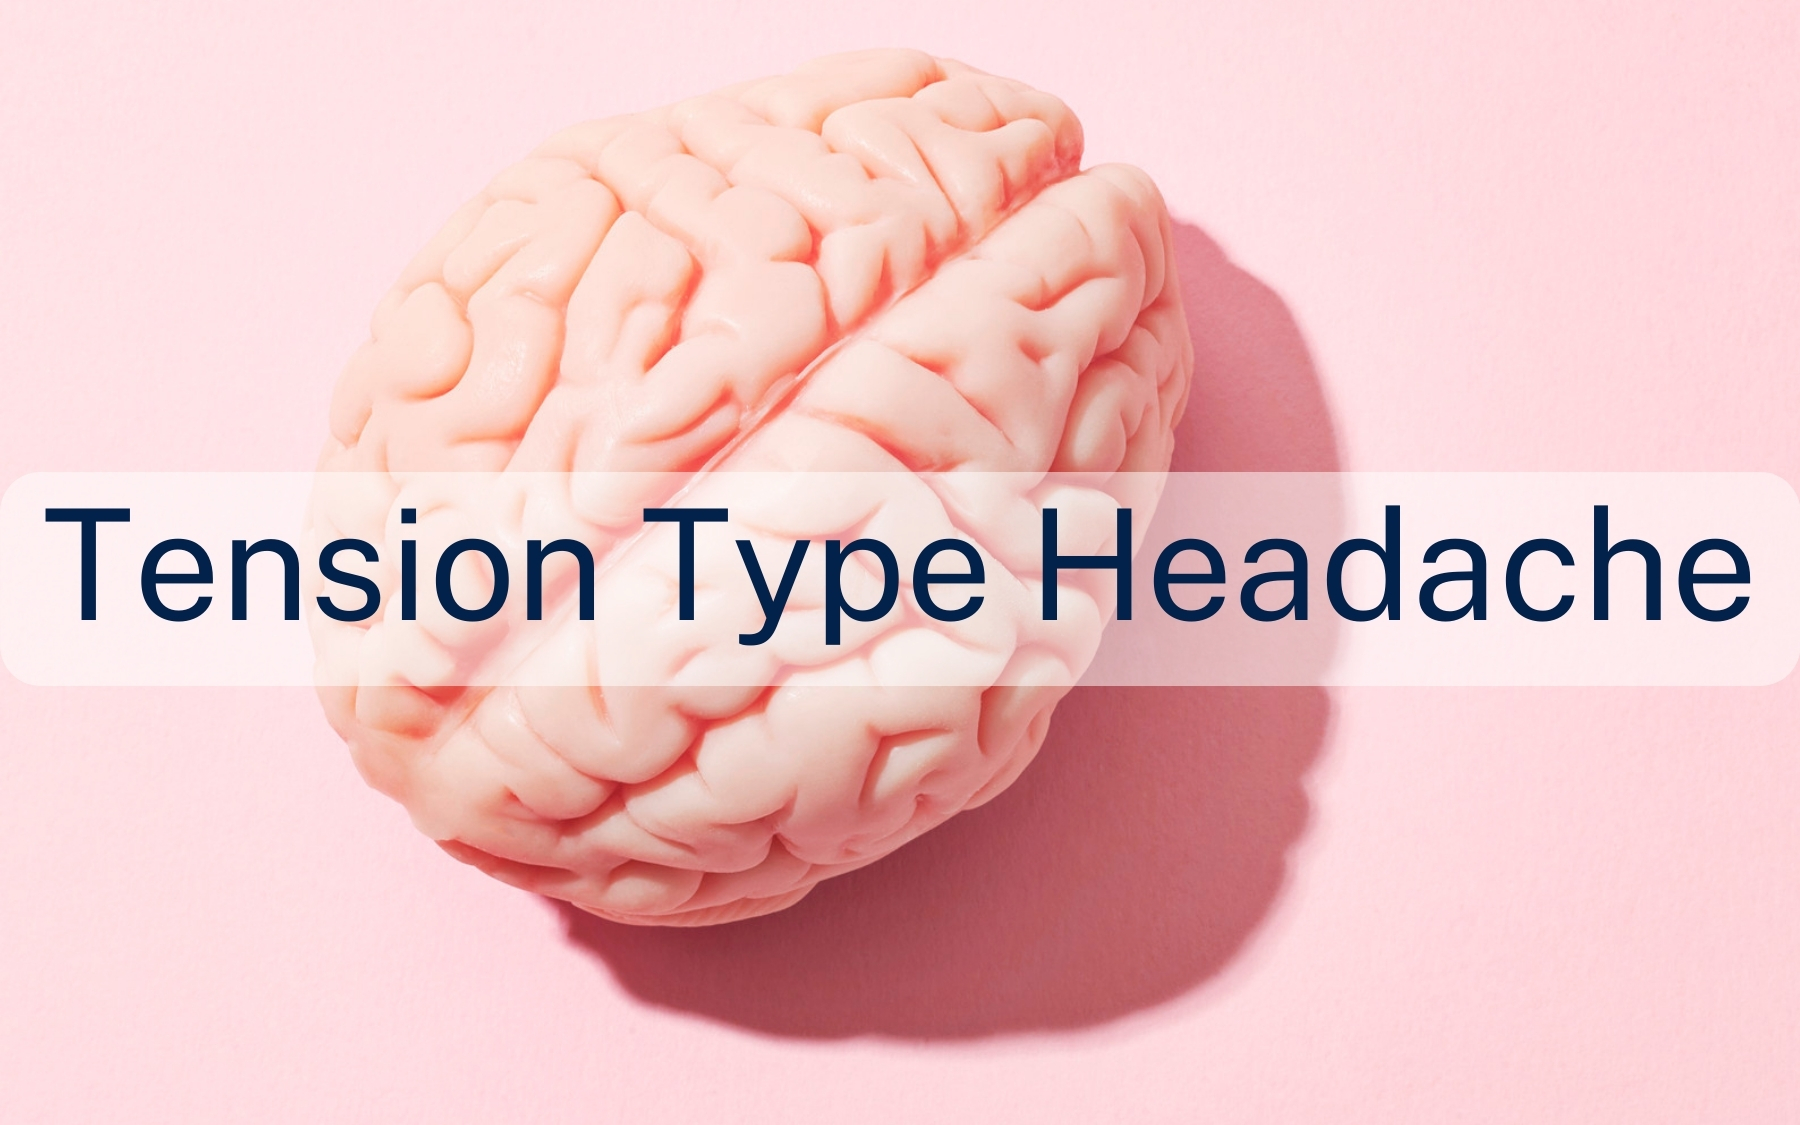 Tension type headache